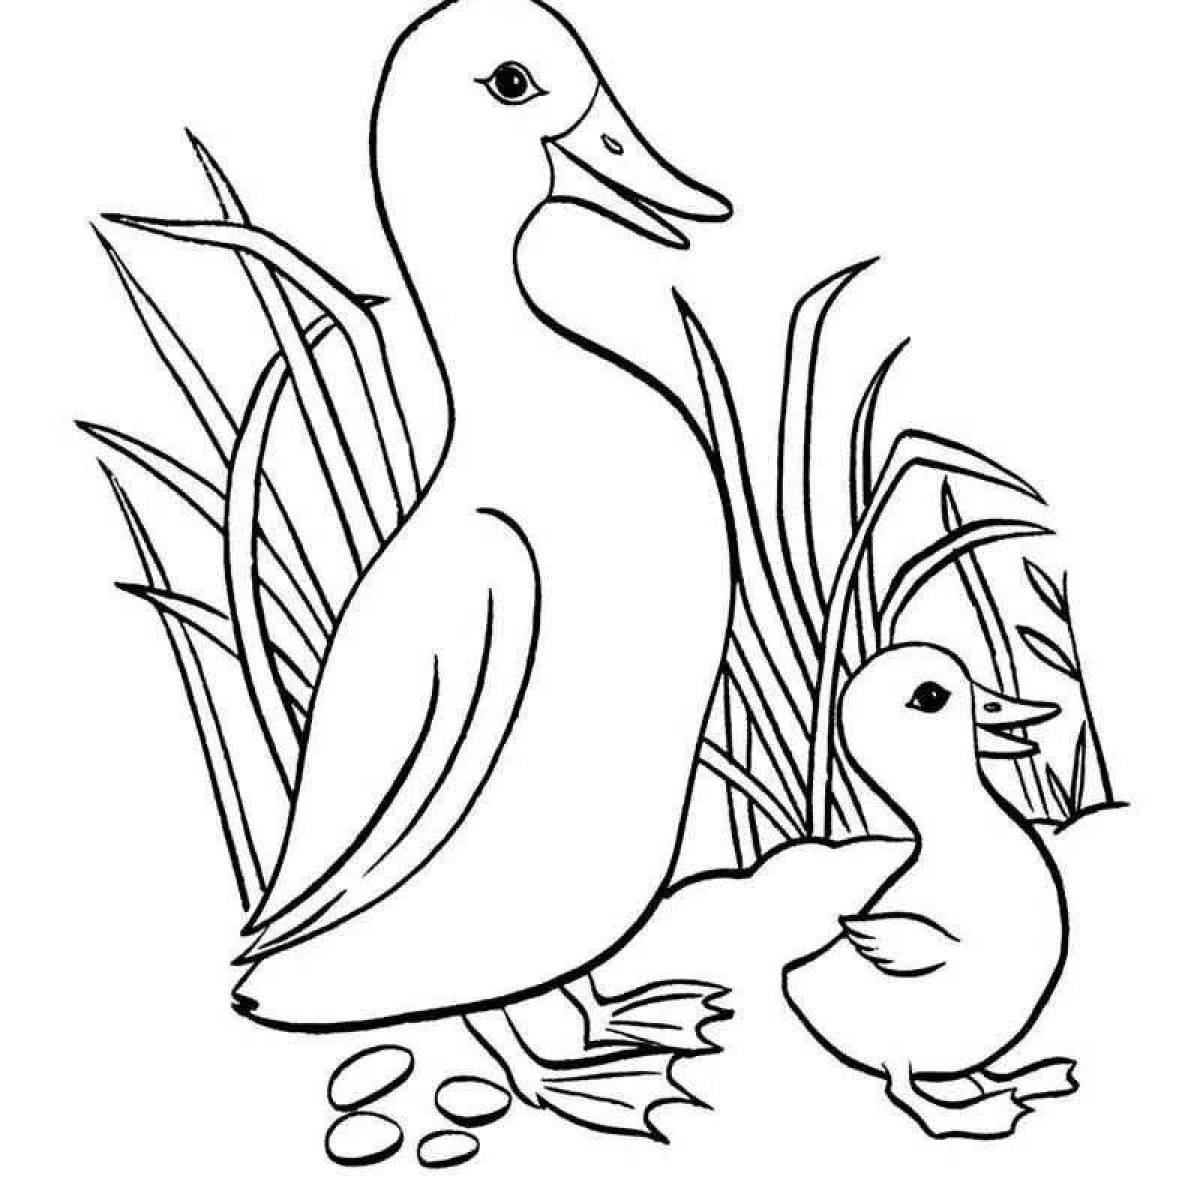 Zani lanfang duck coloring page